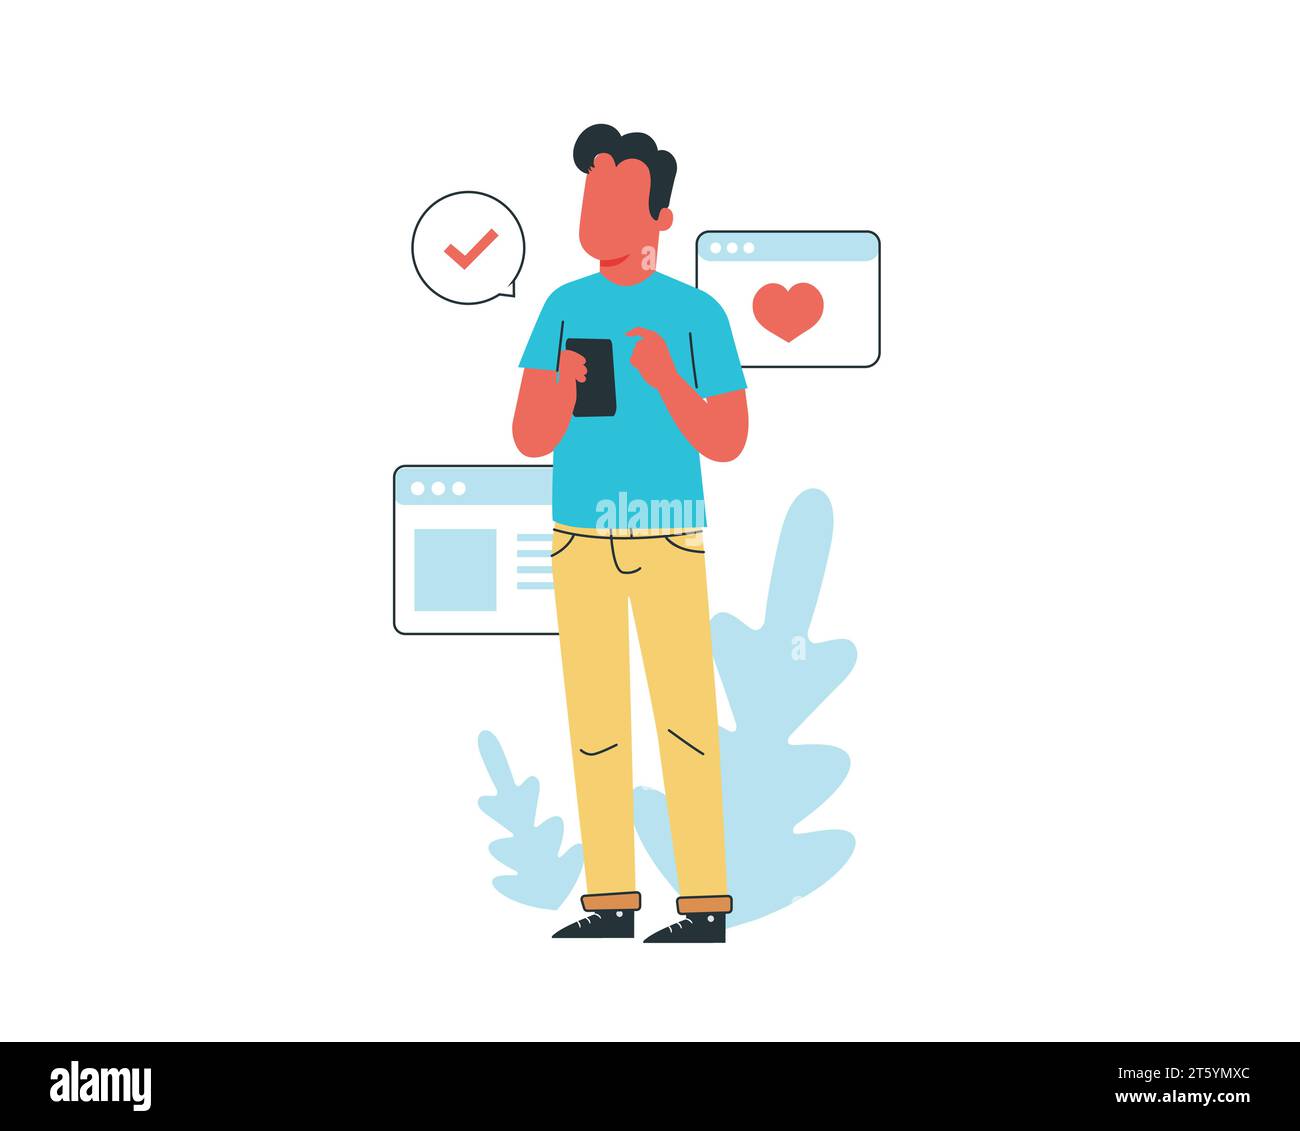 Junger Mann mit Smartphone und Tablet. Vektor-Illustration in flachem Cartoon-Stil. Stock Vektor